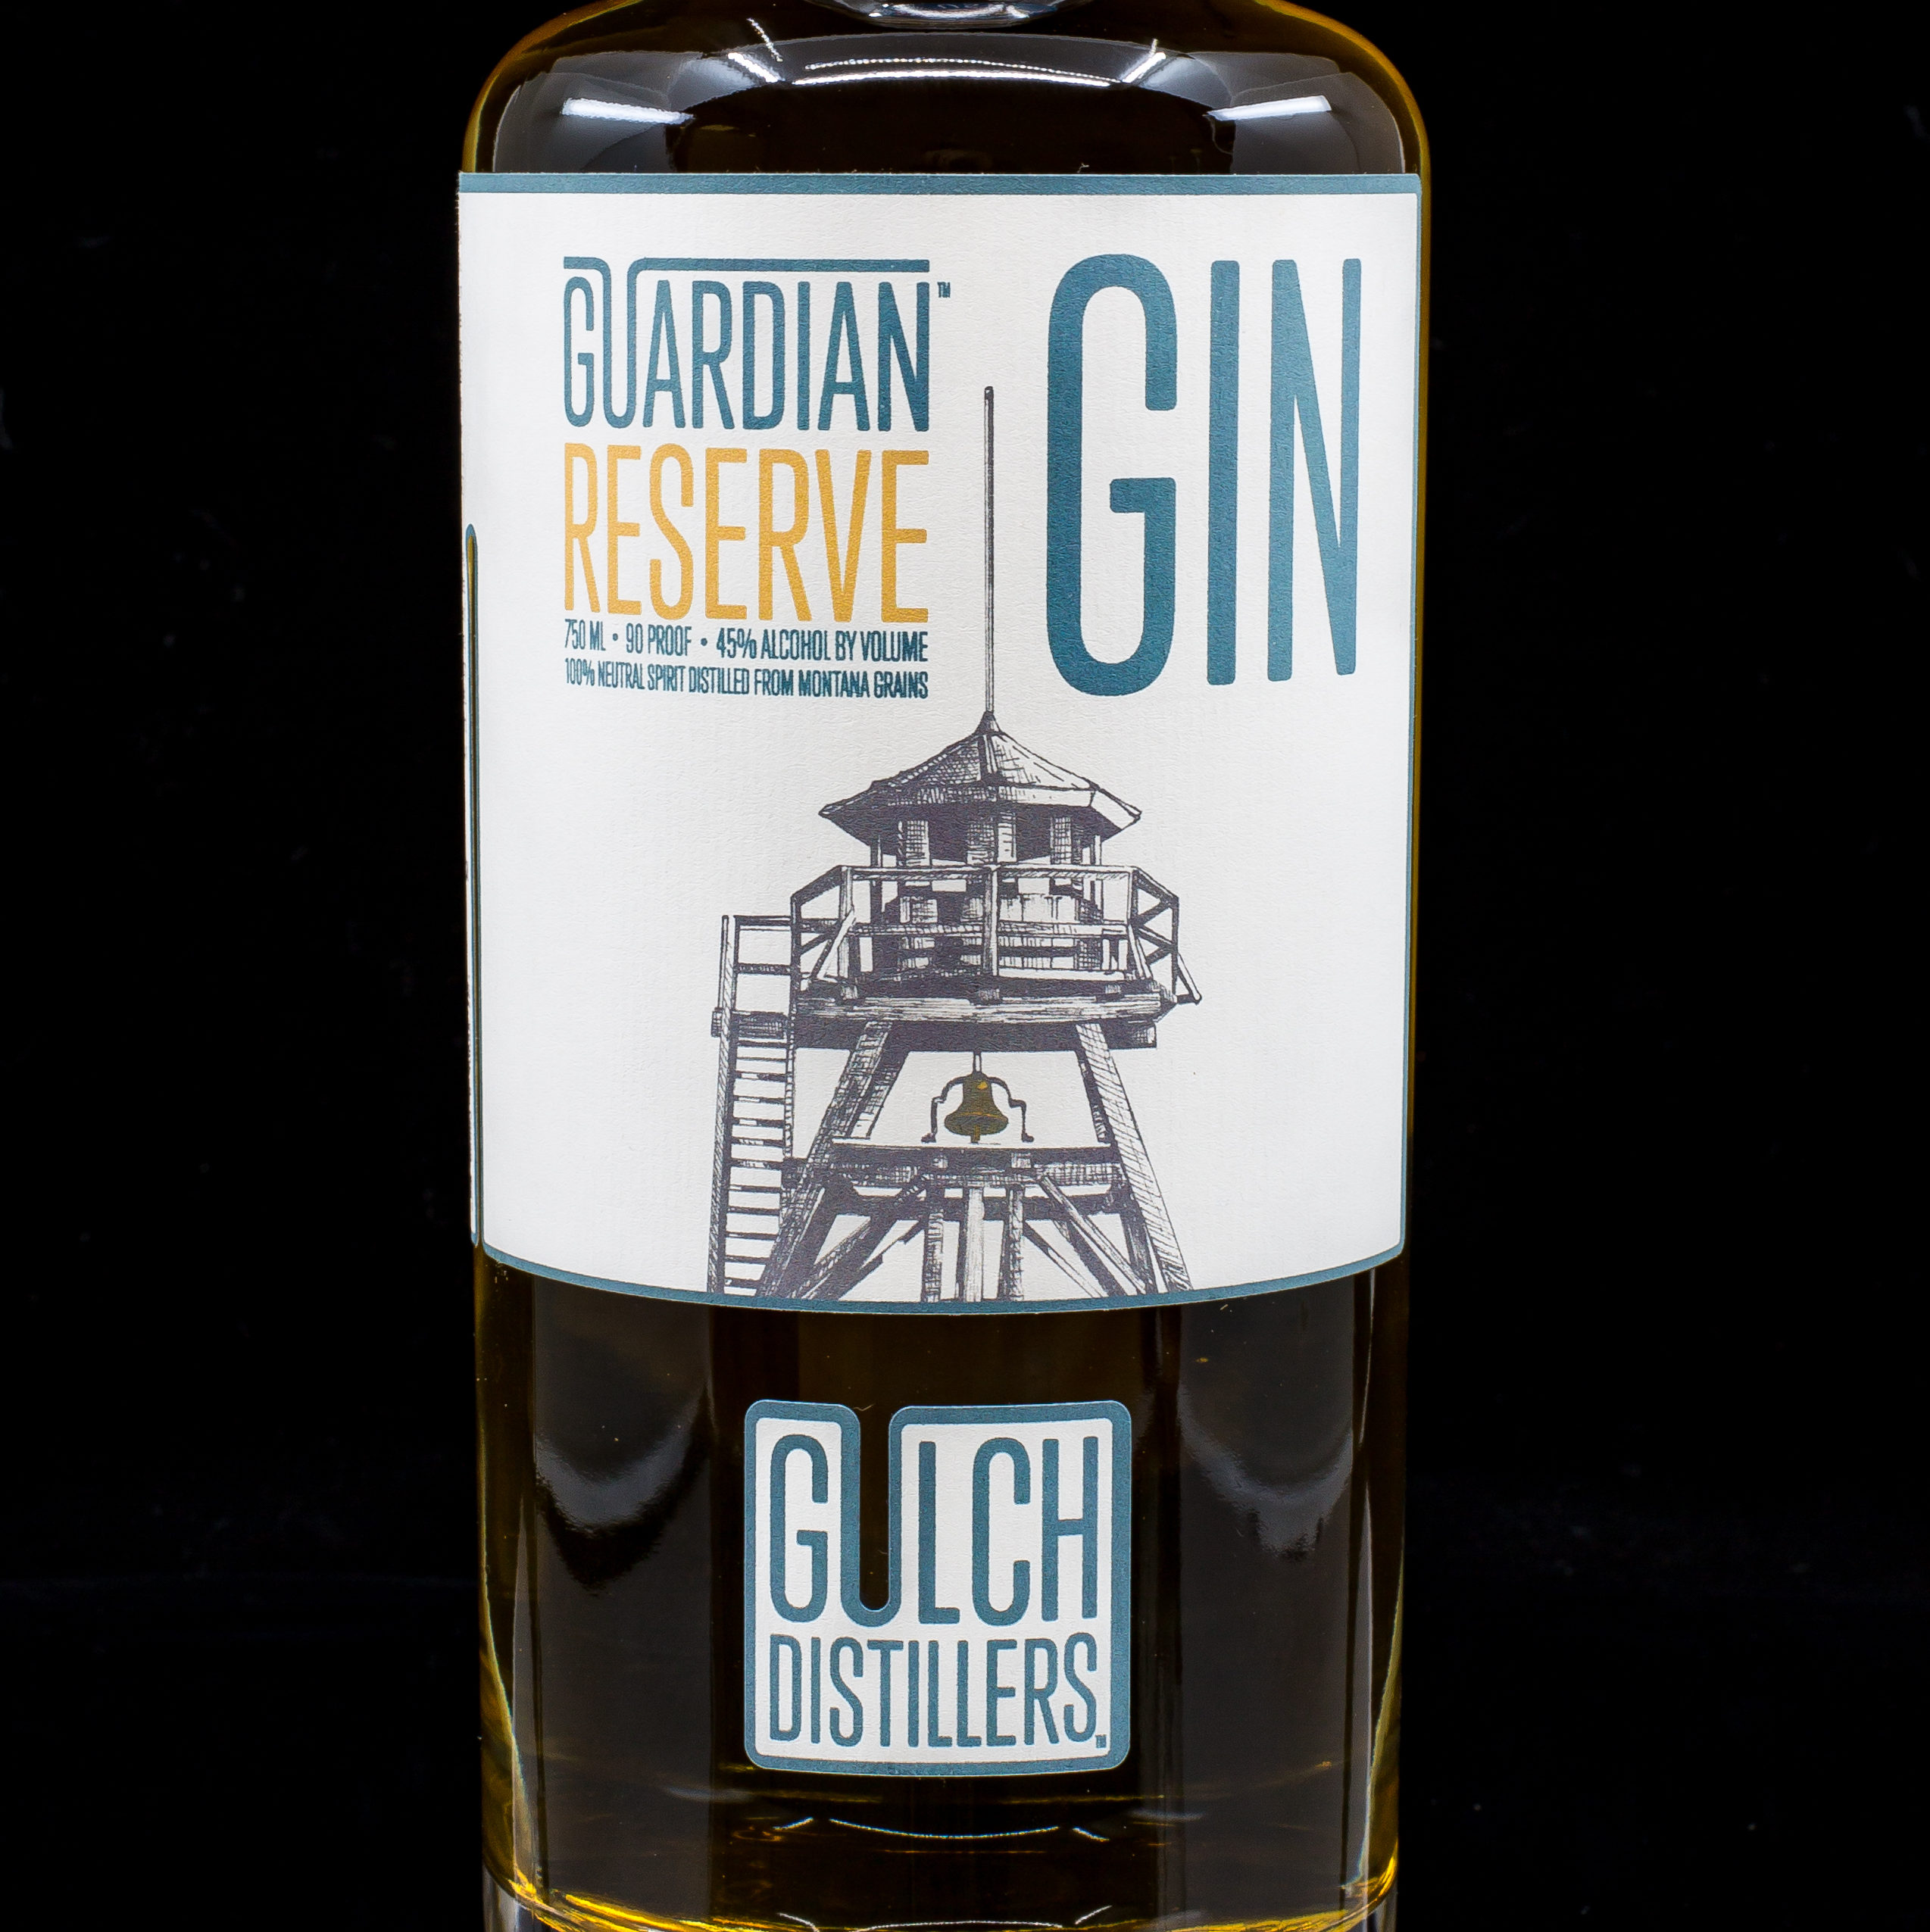 Guardian Gin  Gulch Distillers